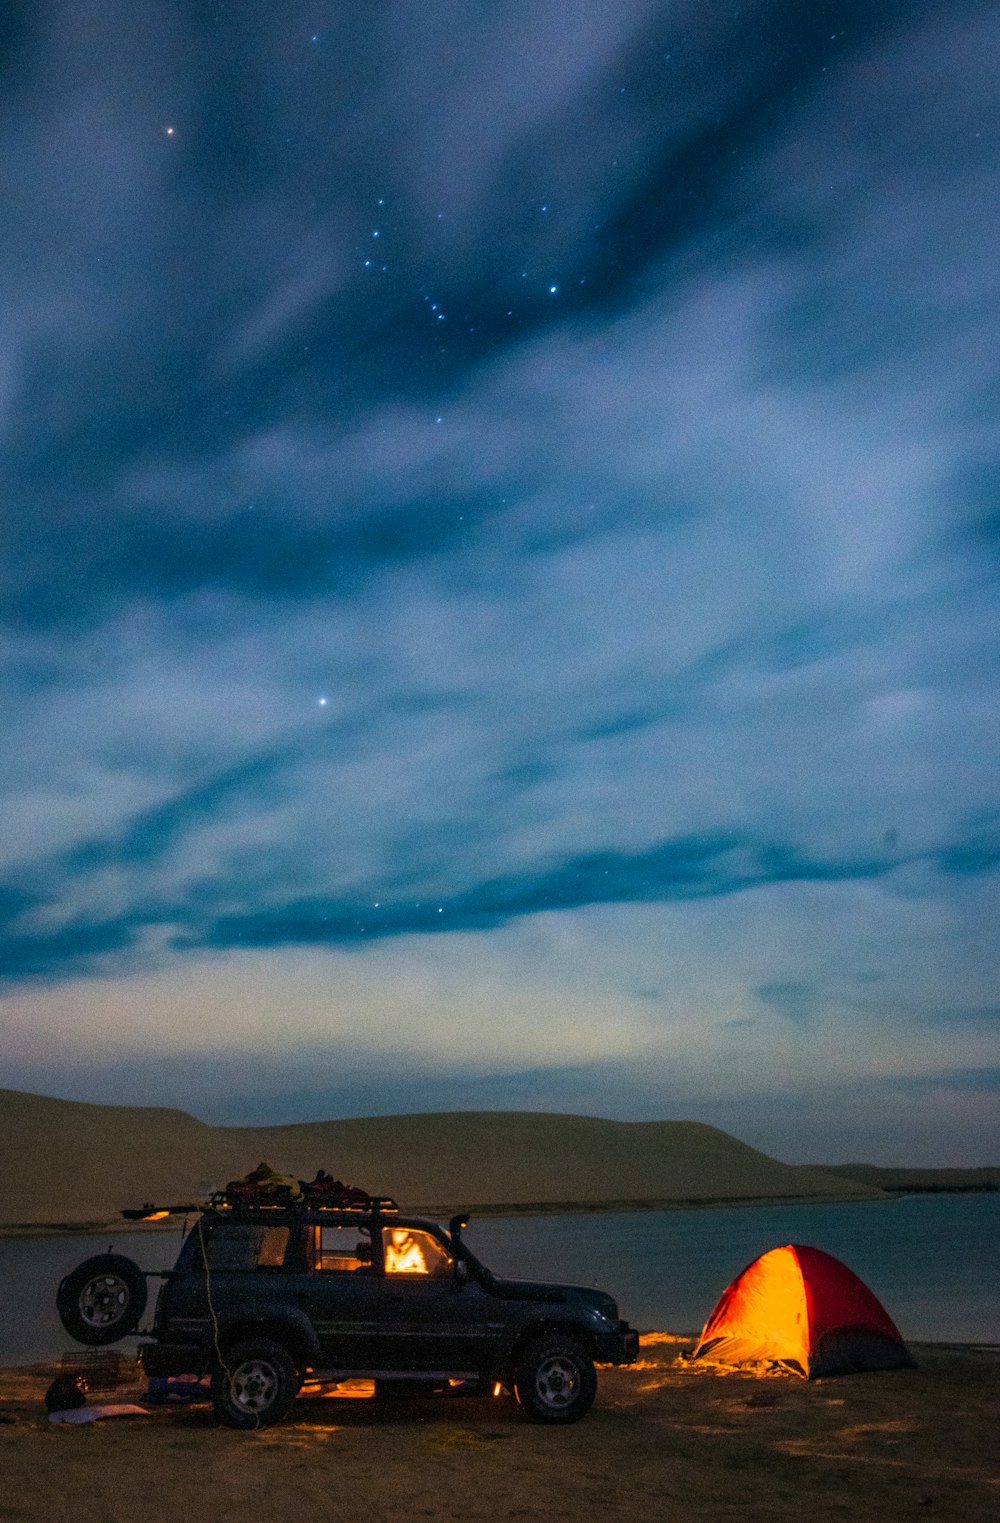 un camion parcheggiato accanto a una tenda sotto un cielo notturno